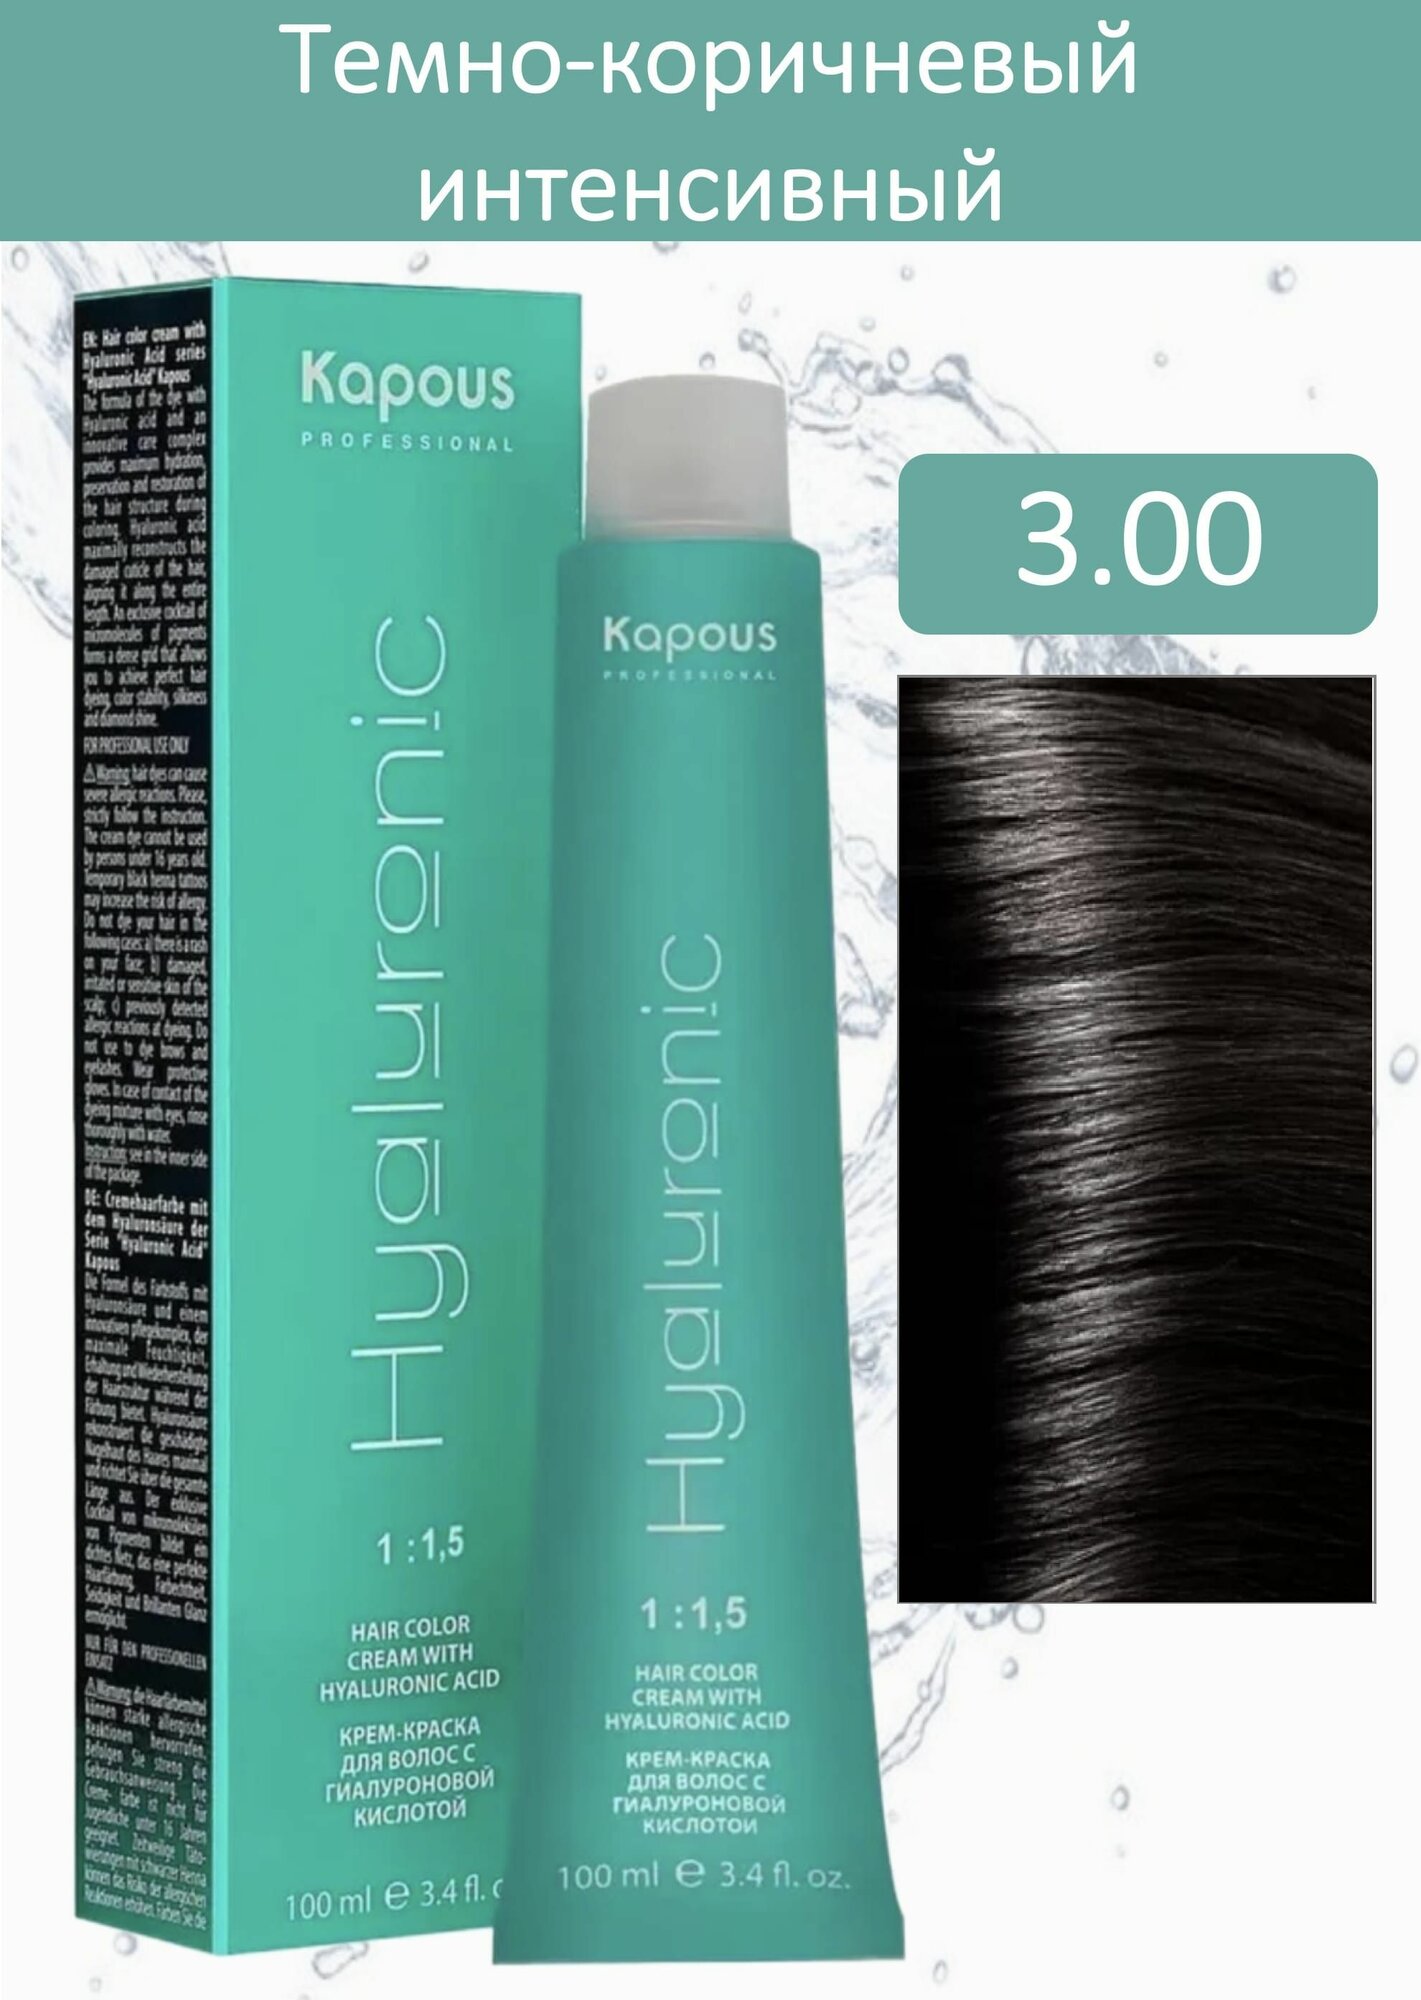 Kapous Professional Крем-краска Hyaluronic acid 3.00 темно-коричневый интенсивный 100мл